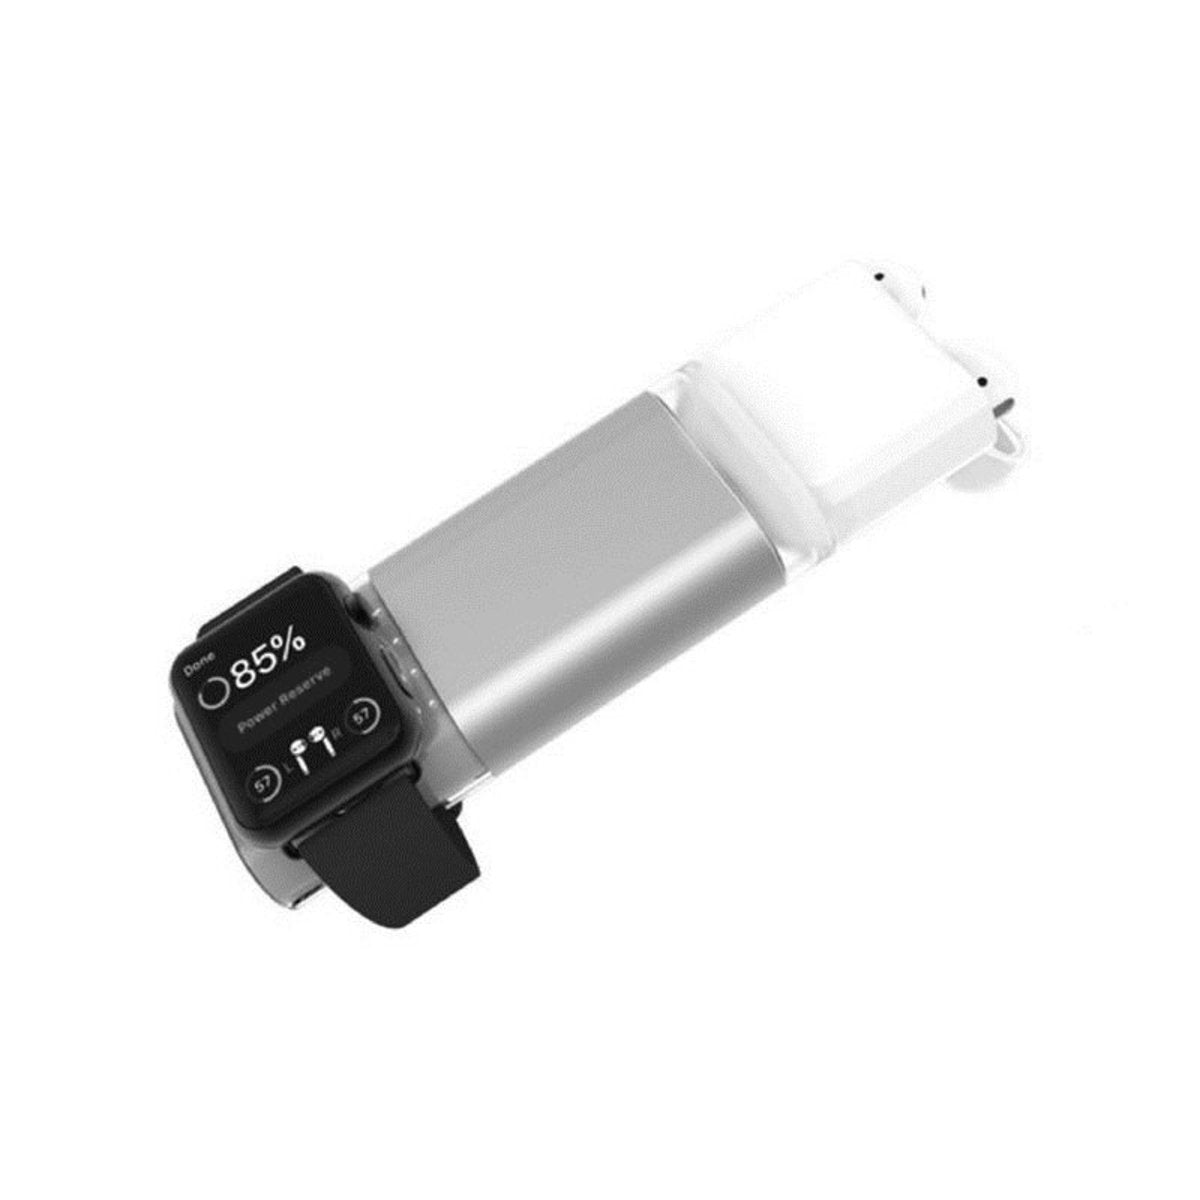 EIRTOUCH - AirPods Apple Watch 無線行動電源 (附送4色外殼) - 銀色